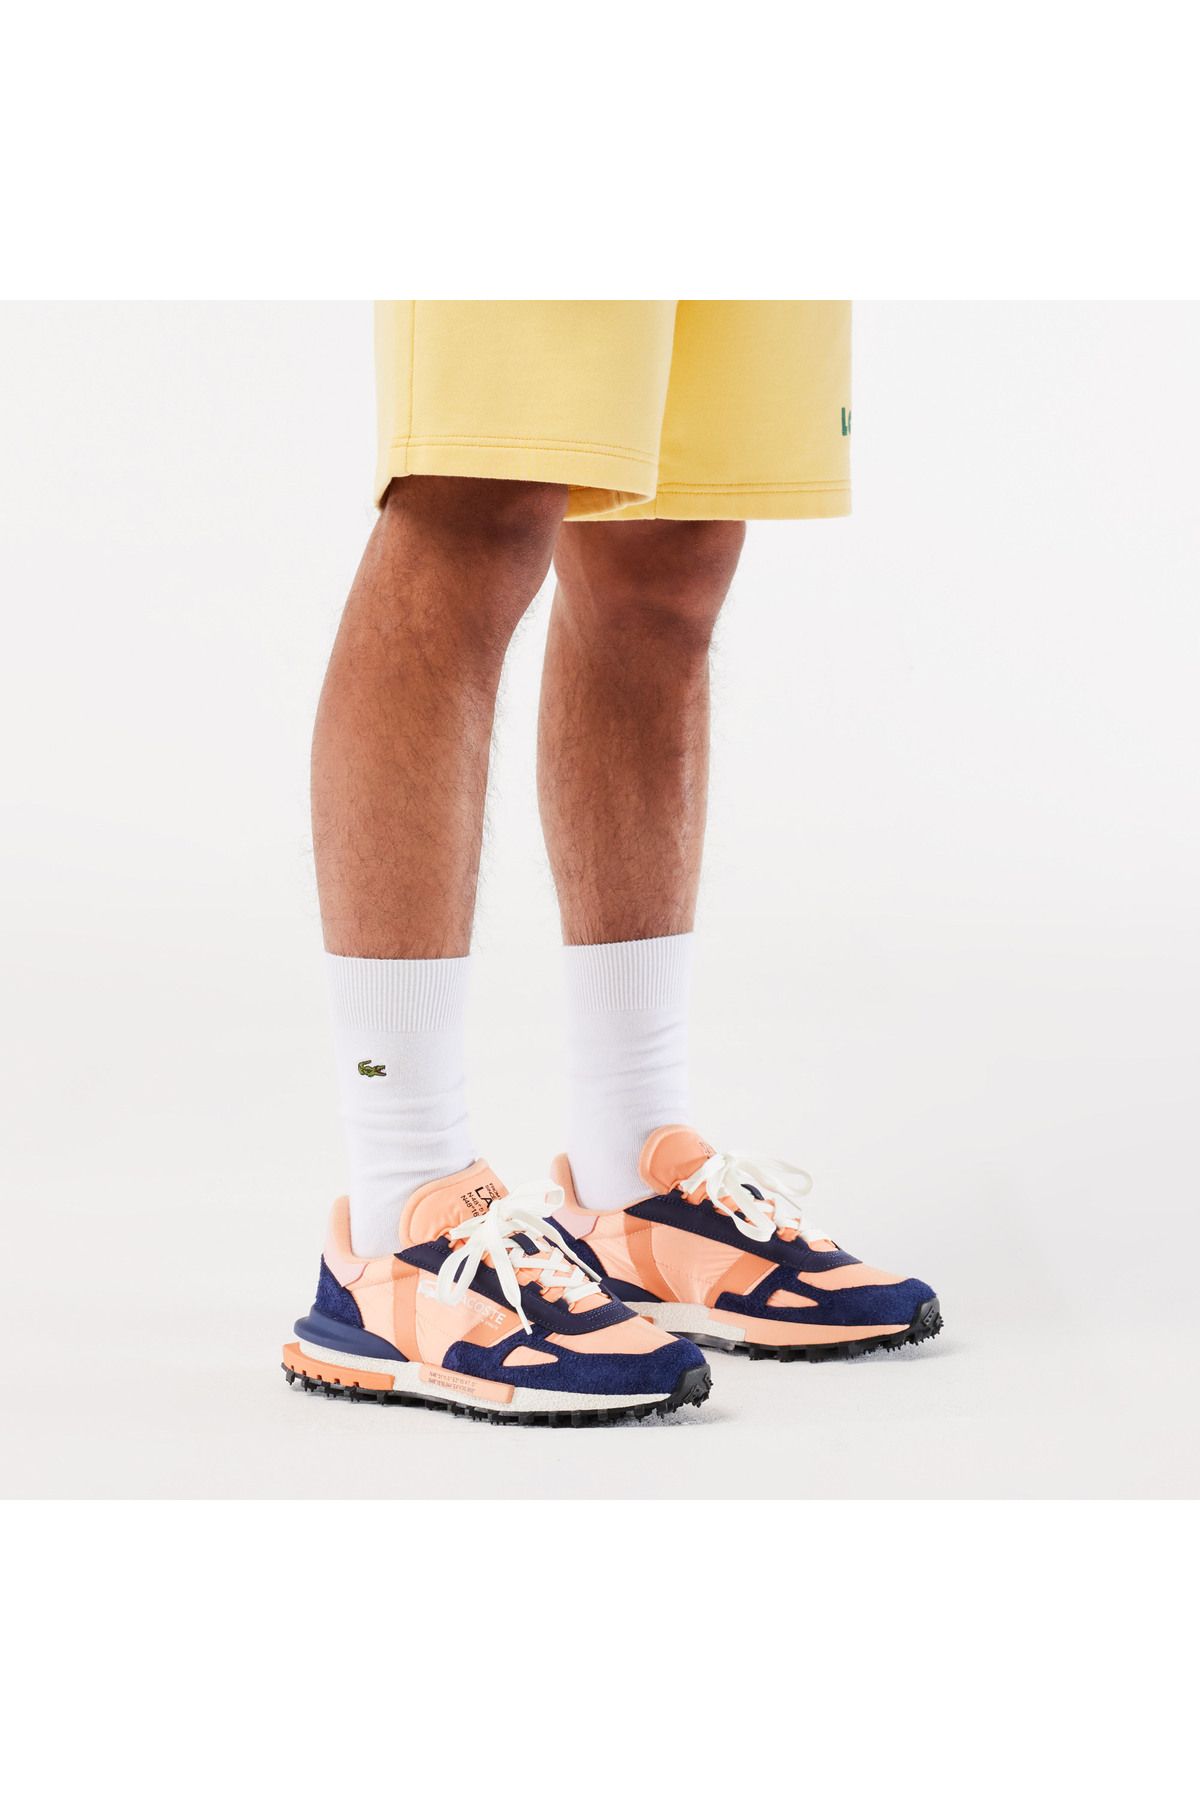 Lacoste کفش ورزشی نارنجی فعال مردان نخبه